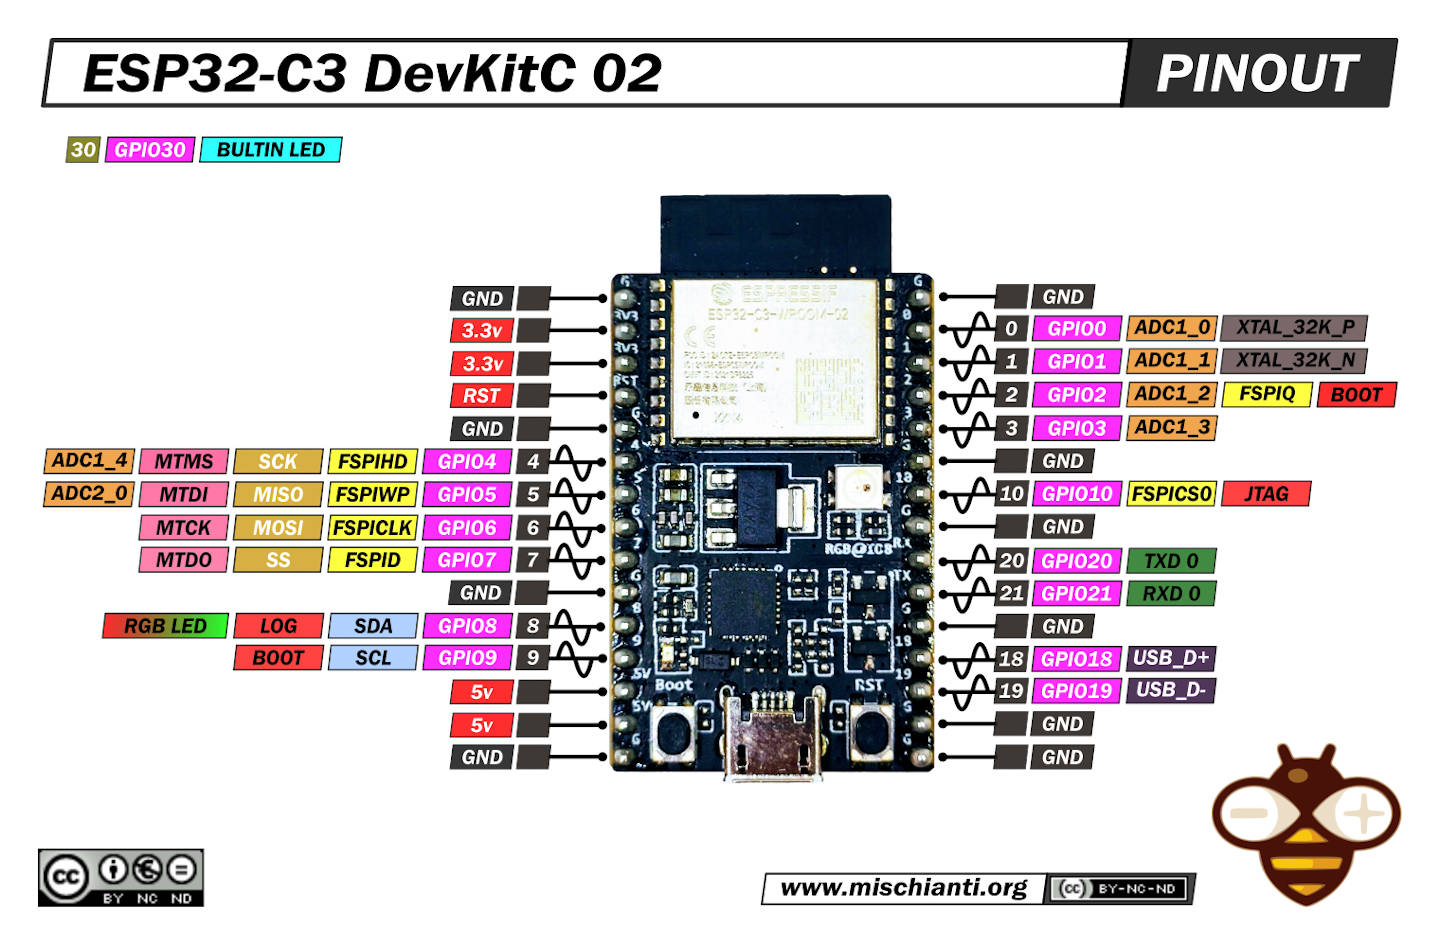 ESP32-C3-DevKitC-02: high-resolution pinout and specs – Renzo